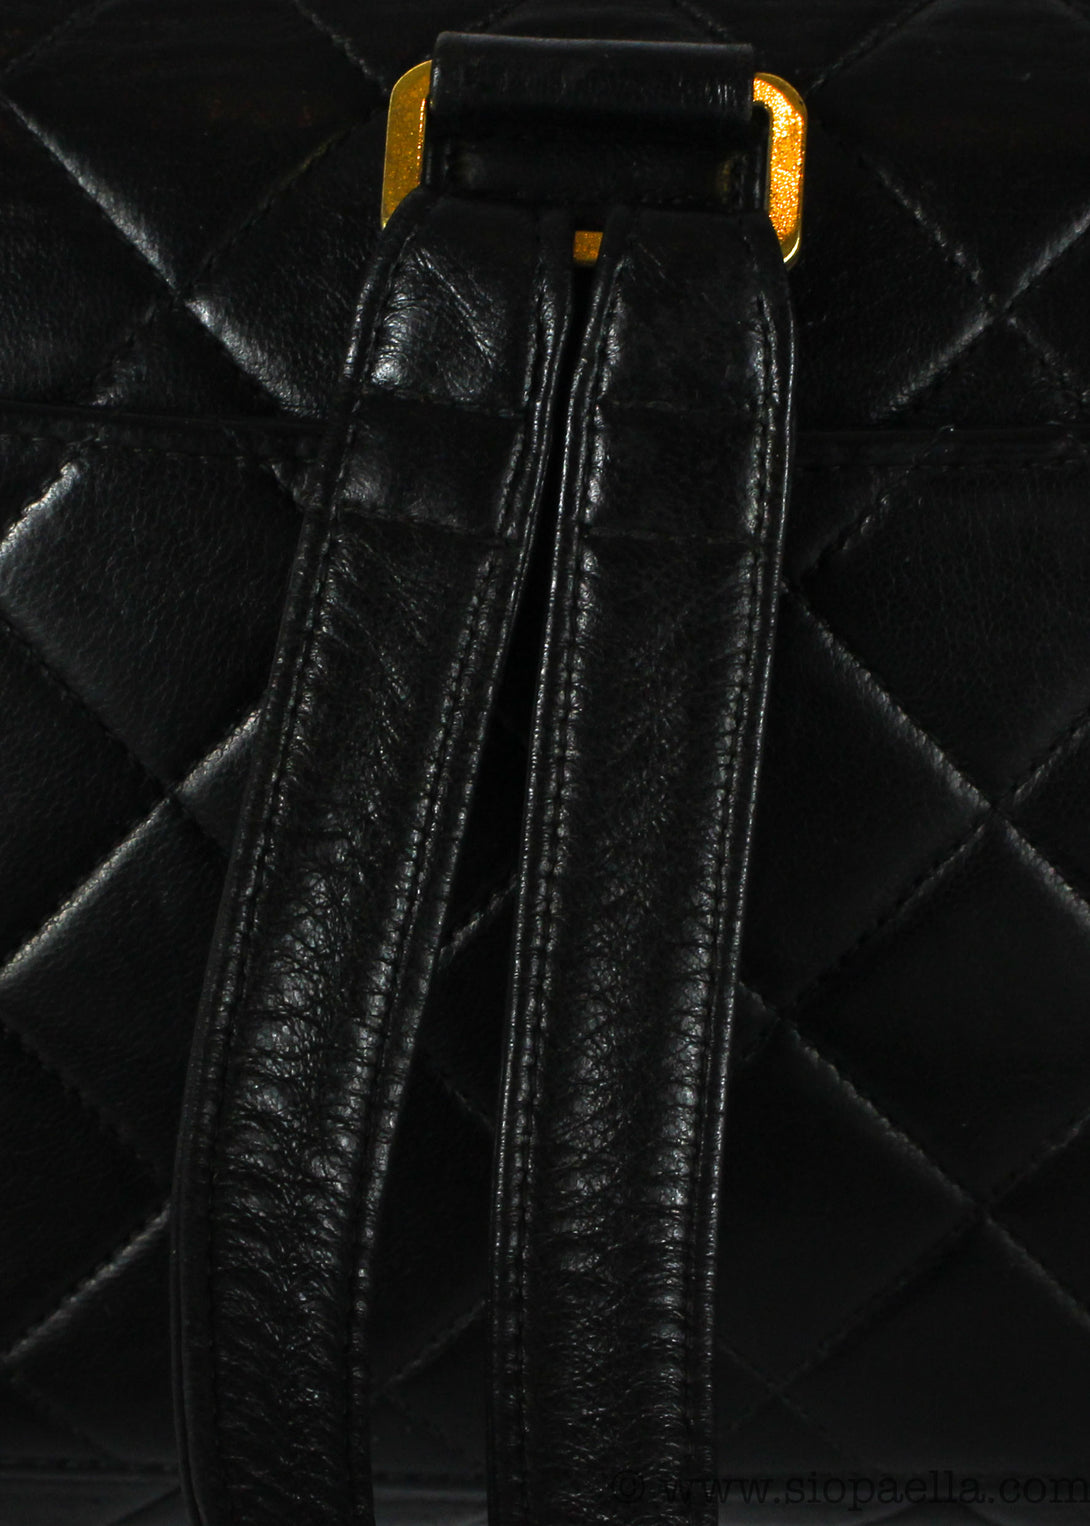 Chanel Lambskin Vintage Flap Backpack - Siopaella Designer Exchange